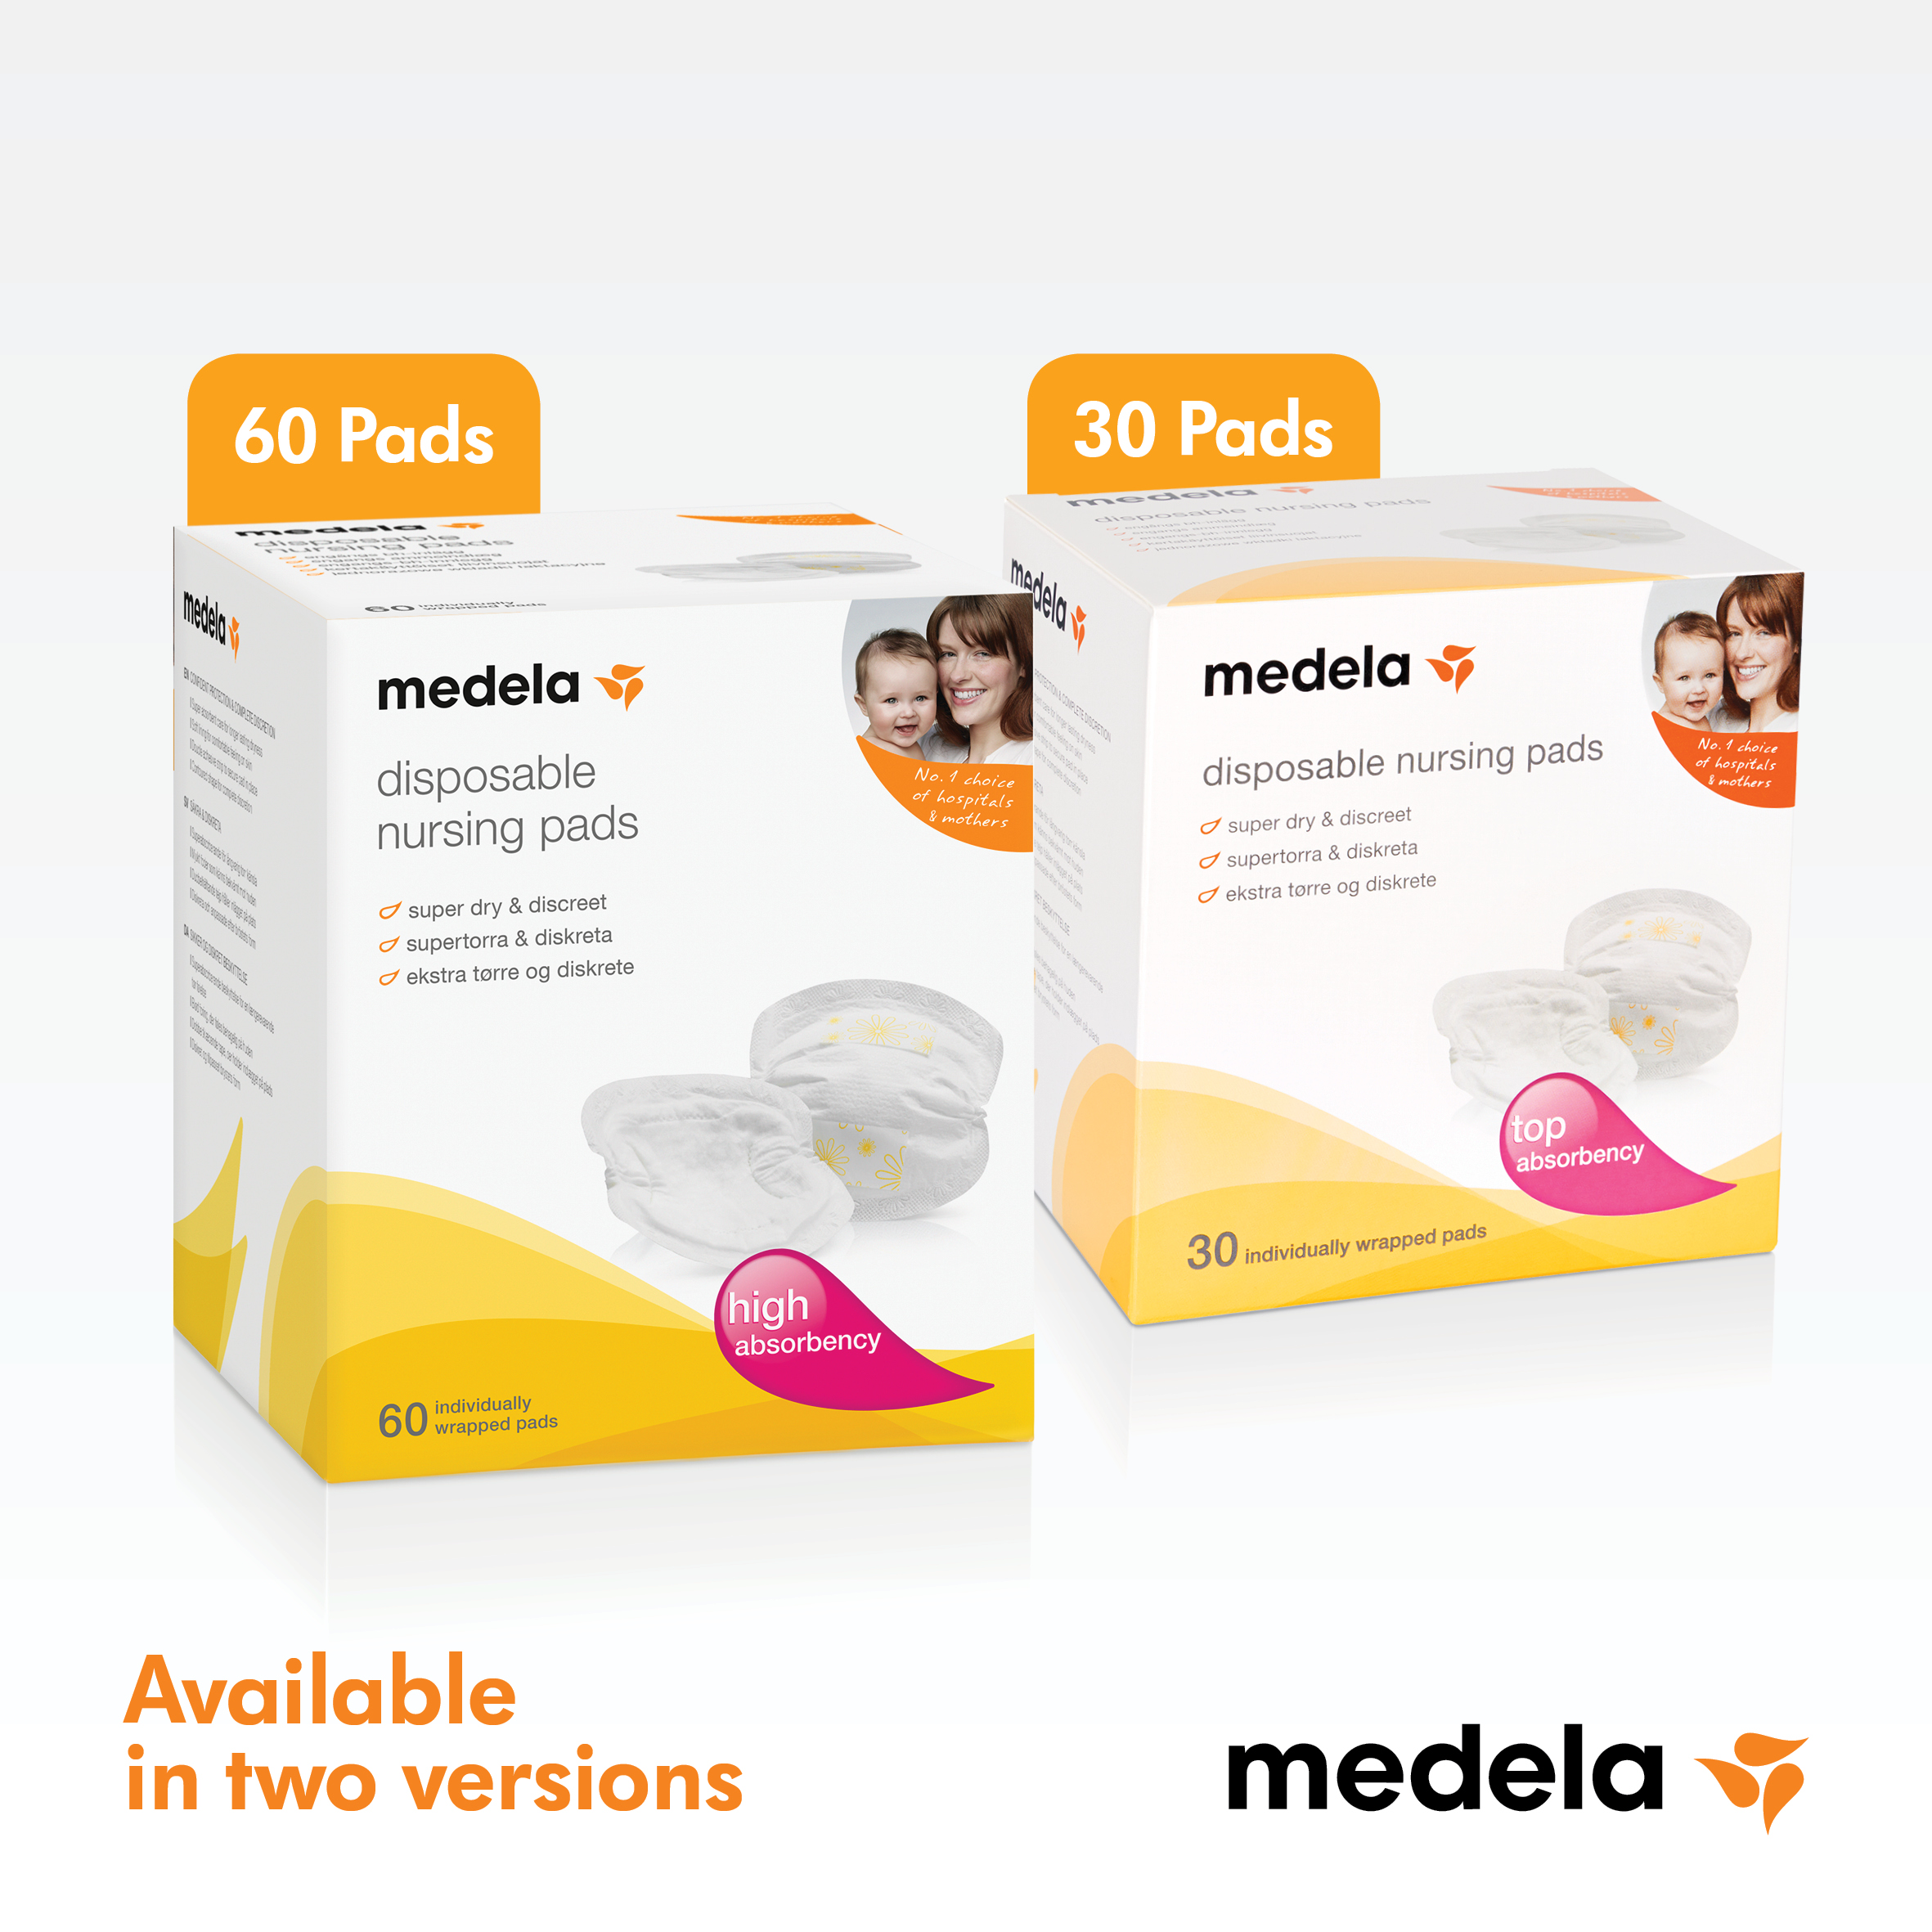 Safe & Dry™ Ultra Thin Disposable Nursing Pads - Medela Singapore